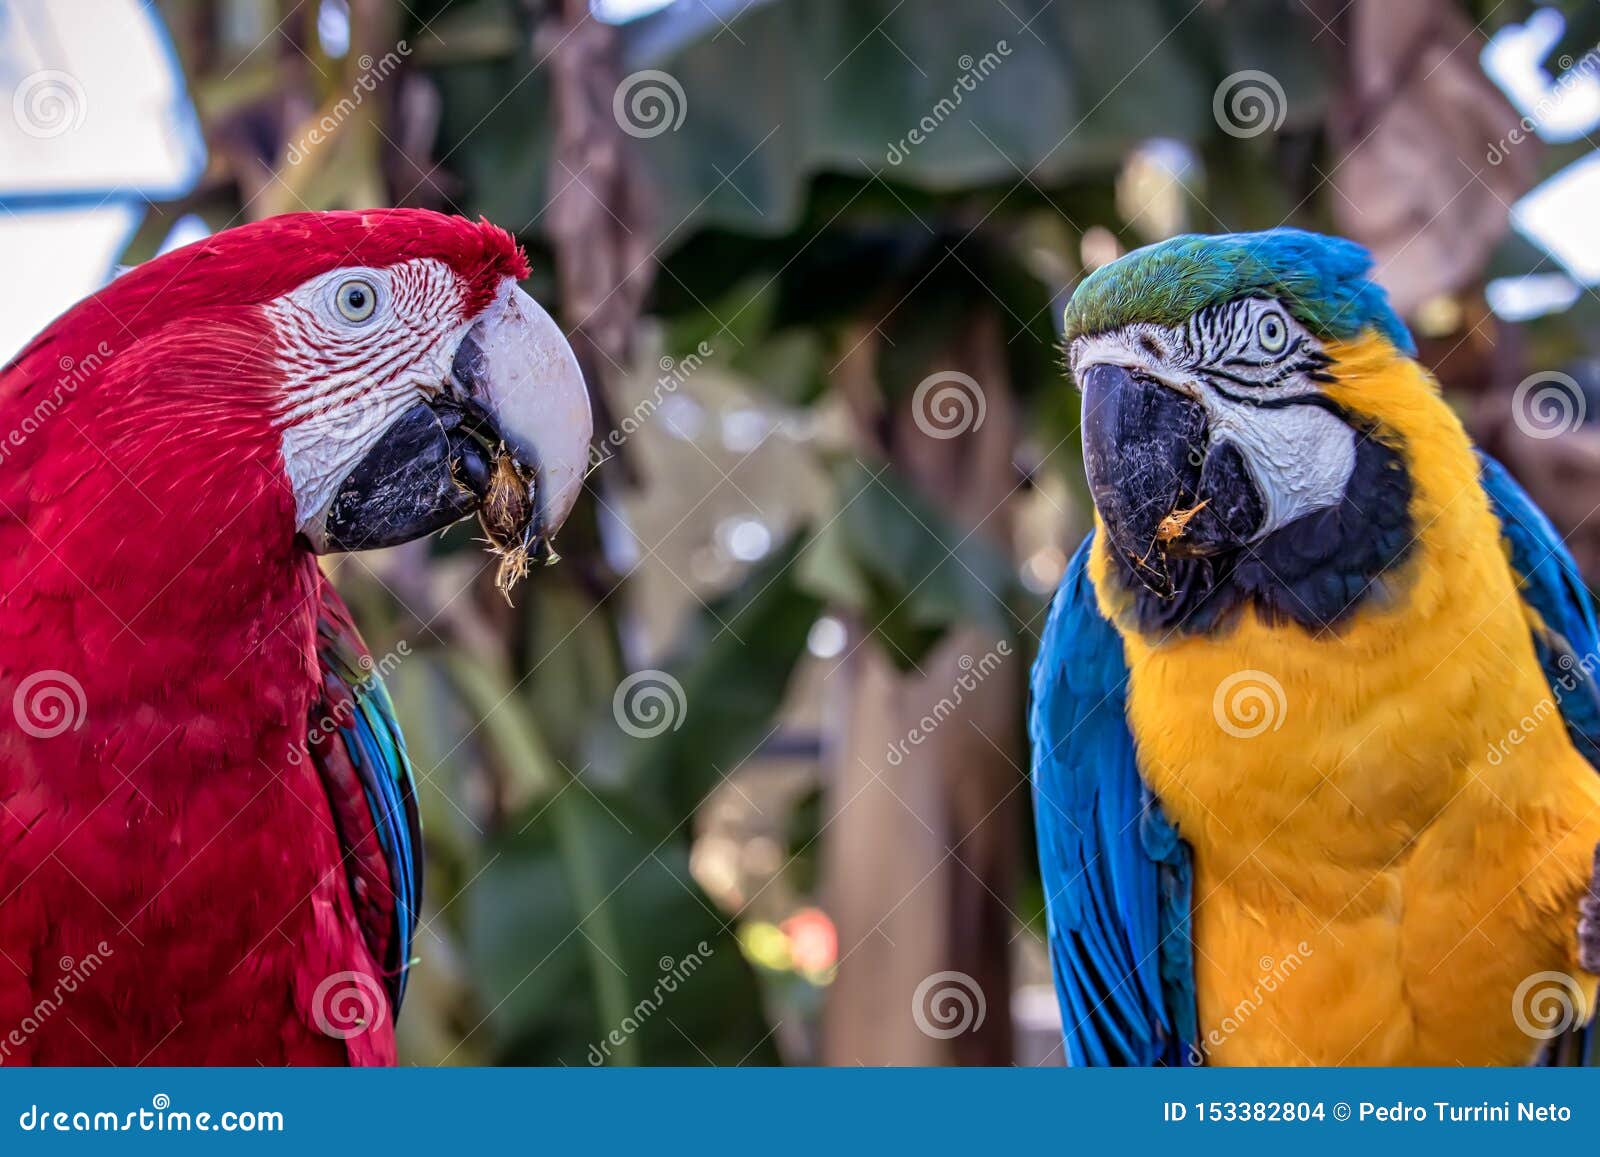 bird ara ararauna and red macaw eating , blue and yellow macaw aka arara caninde and red macaw, exotics brazilian birds